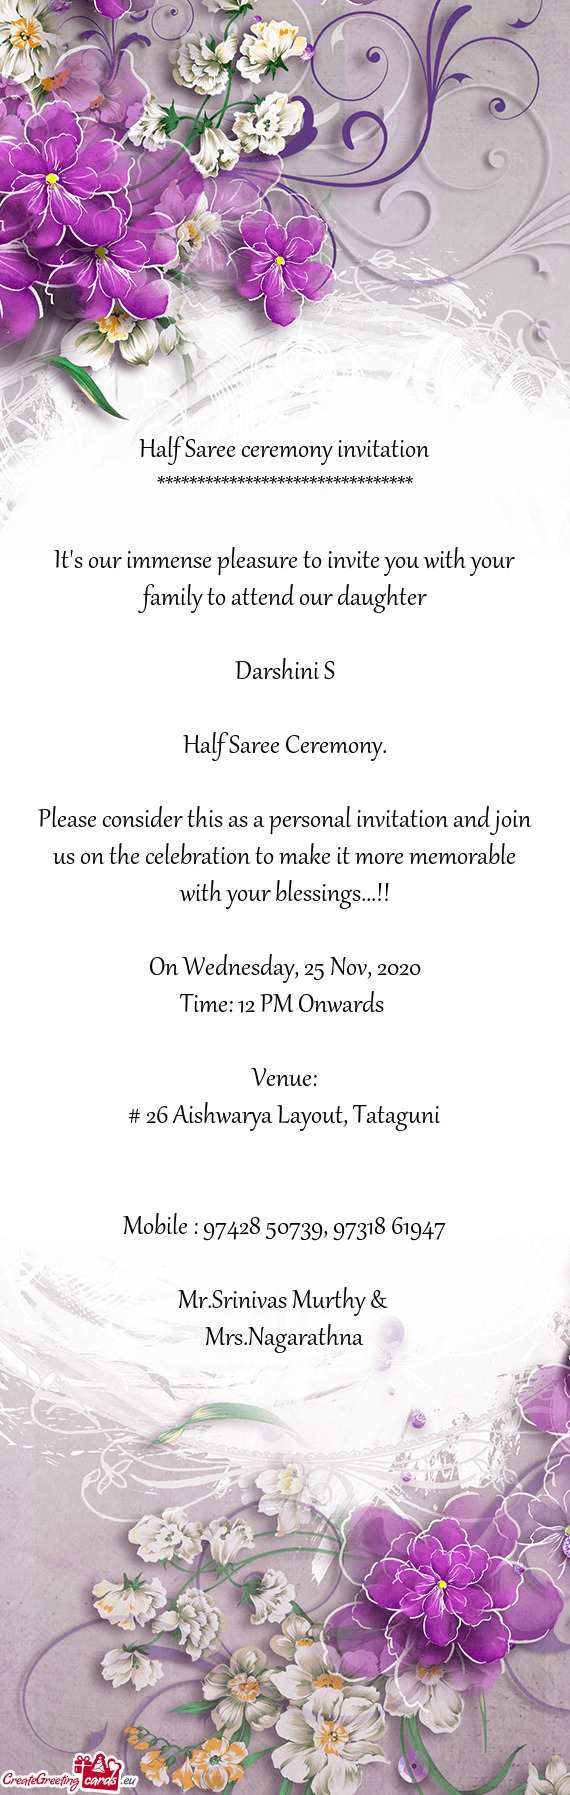 Half Saree ceremony invitation - Free cards